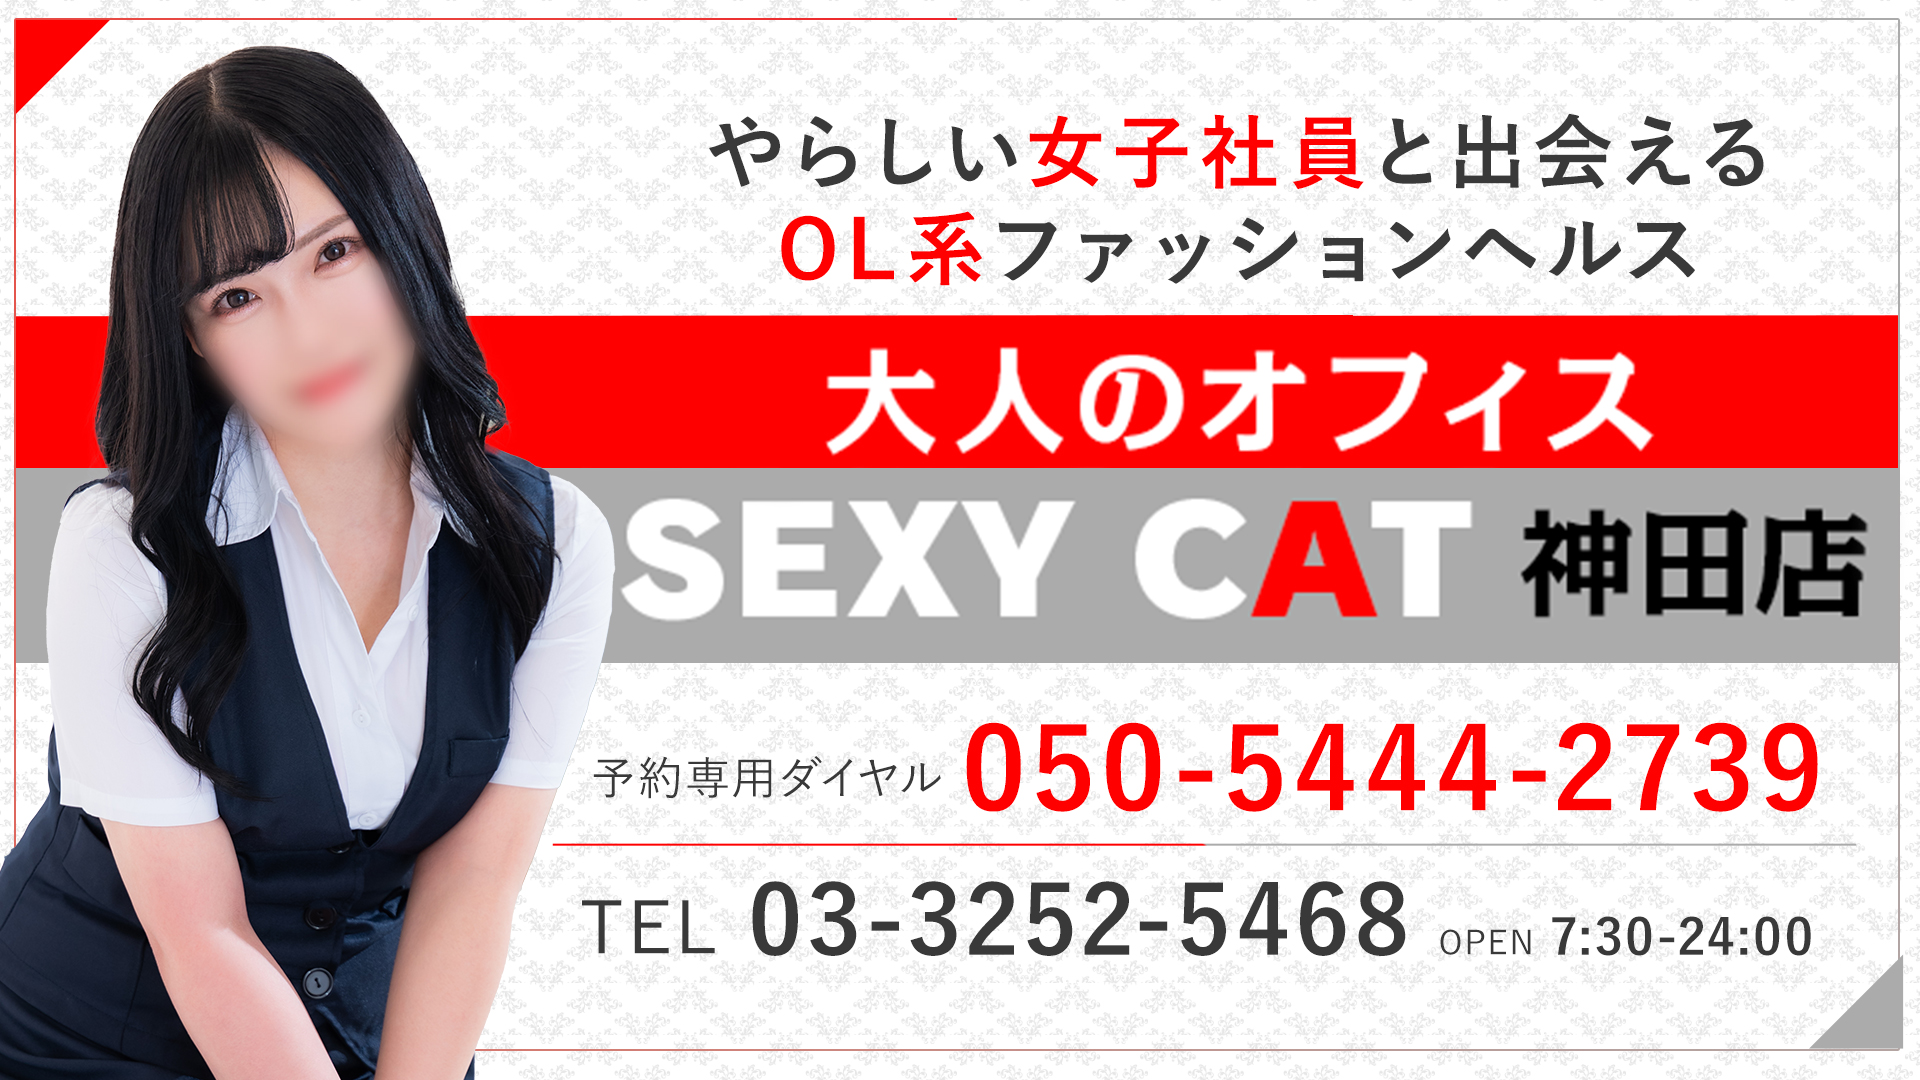 SEXY CAT 神田店